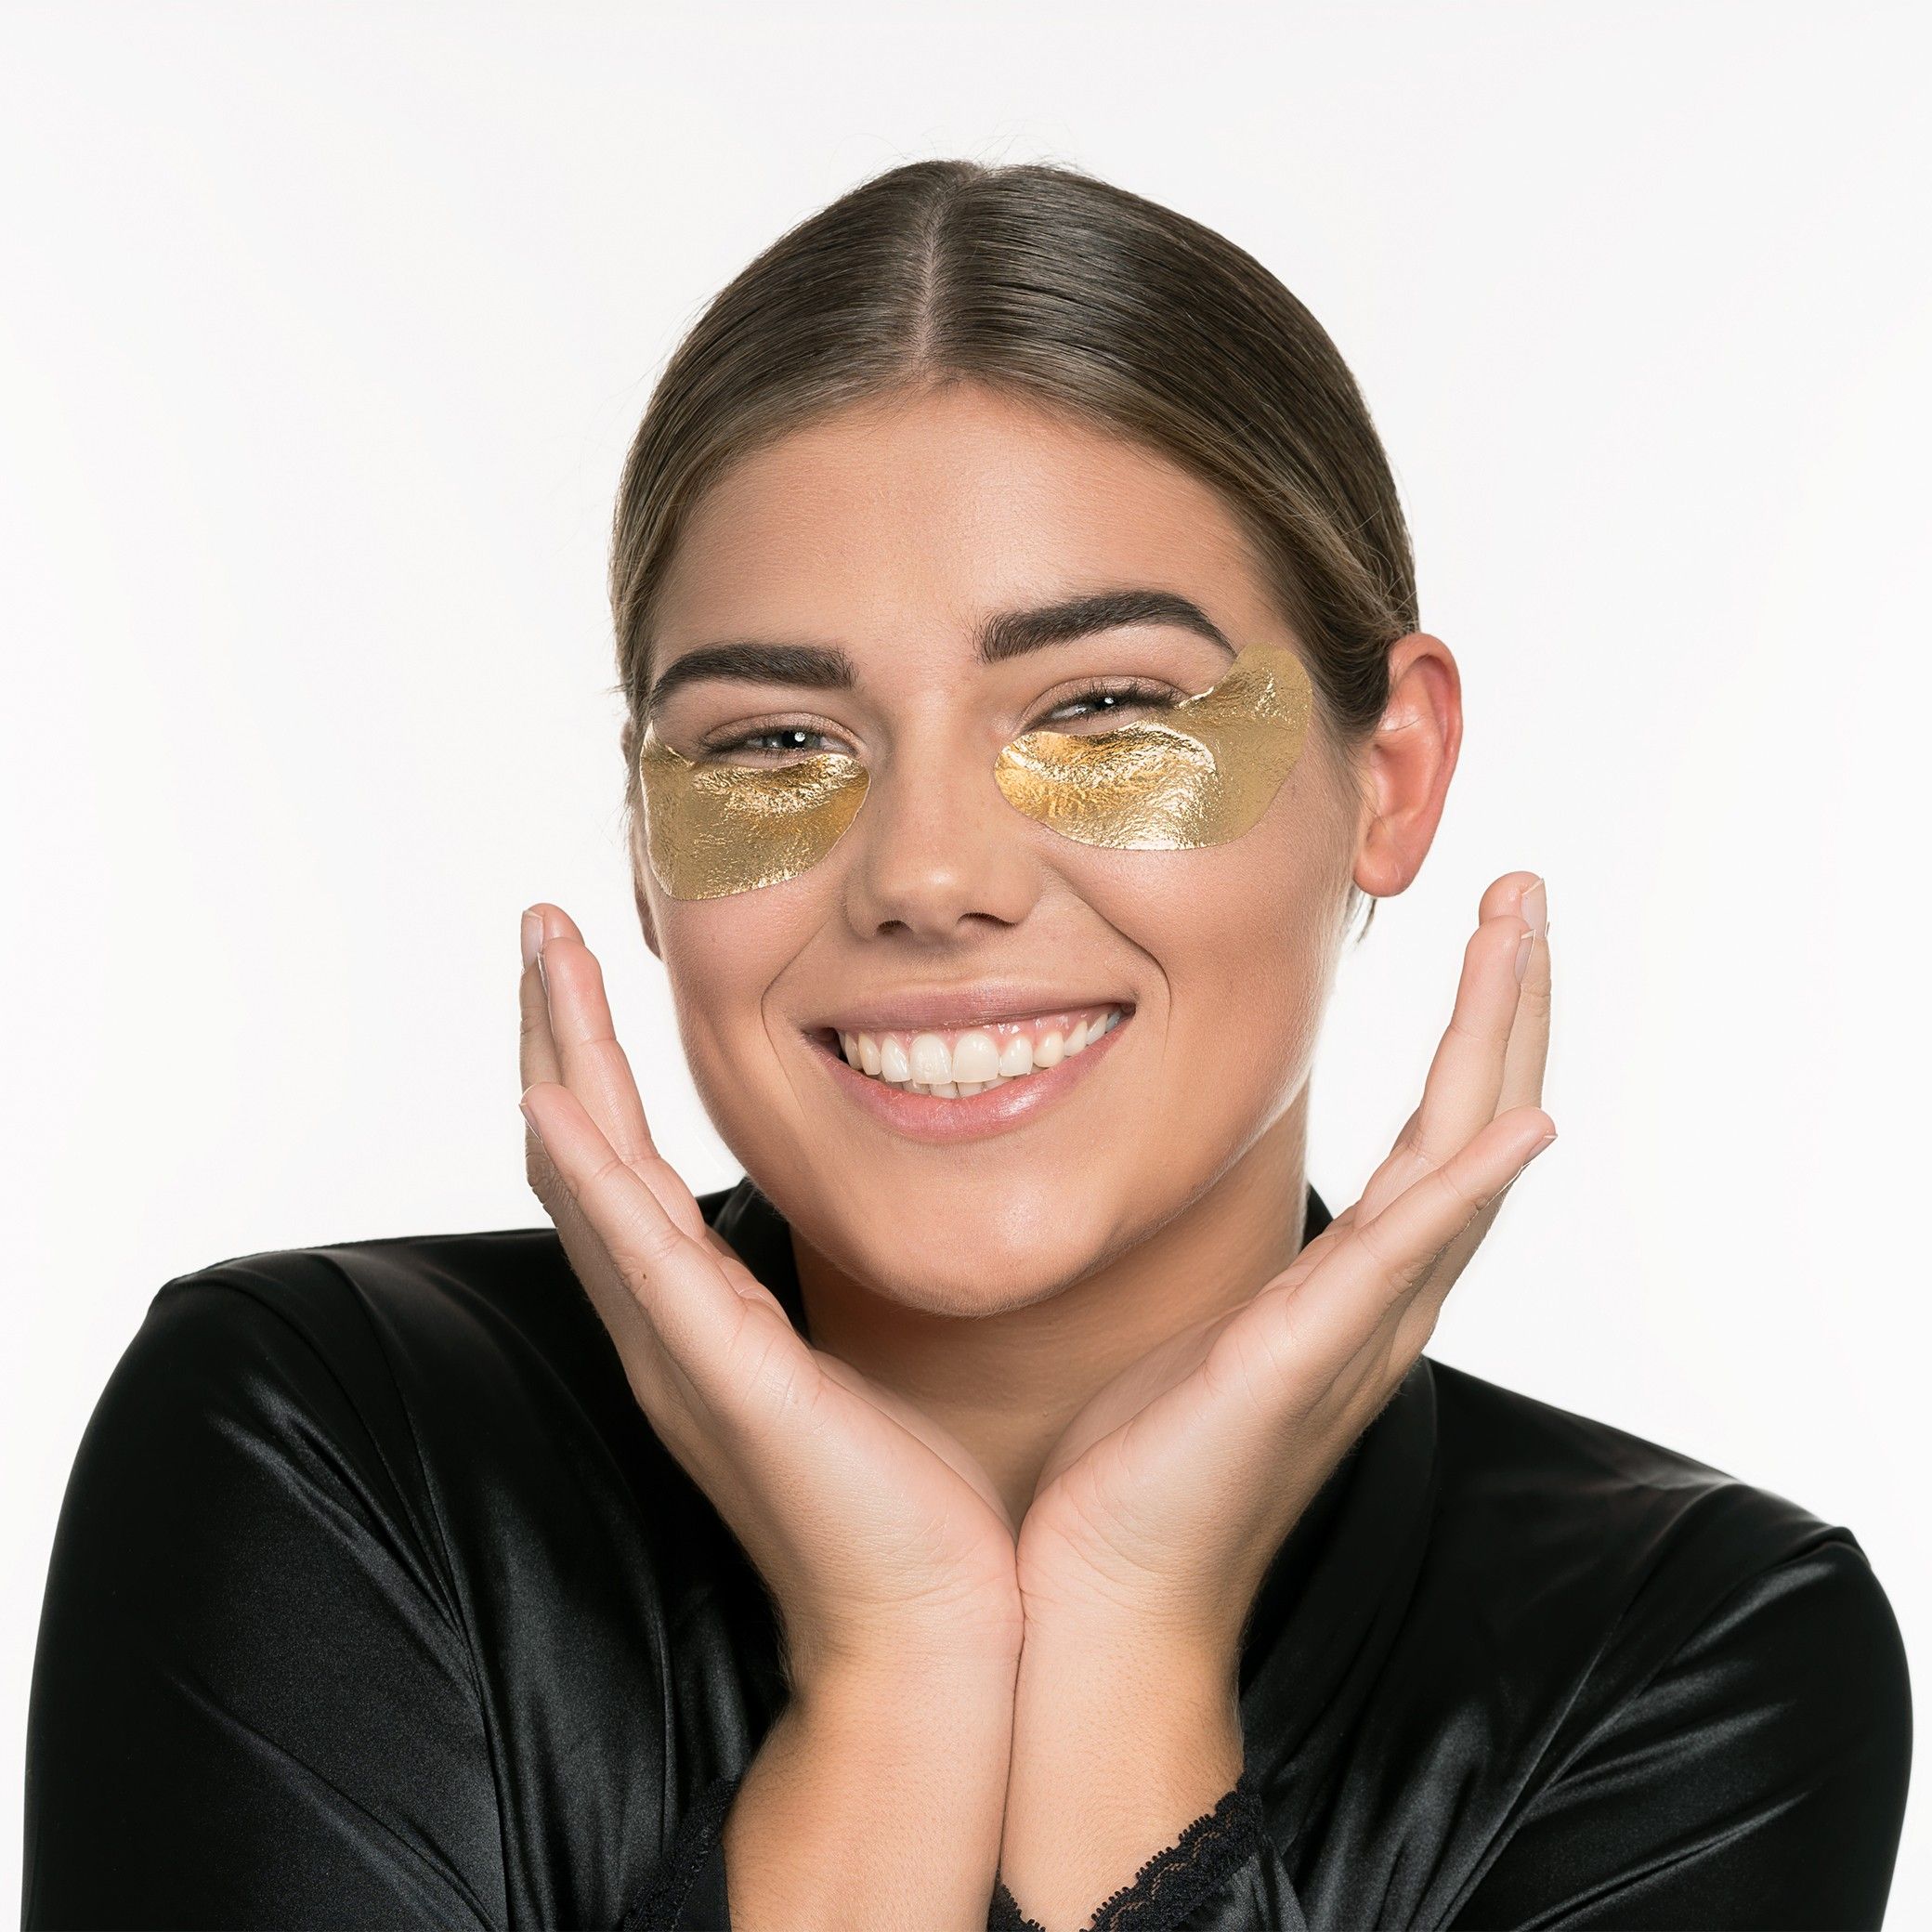 Masques Yeux Feuille d'Ore Revitalisants de Luxe - VIP The Gold Mask Eye - Revitalizing Luxury Gold Foil Eye Masks (5 Paires)